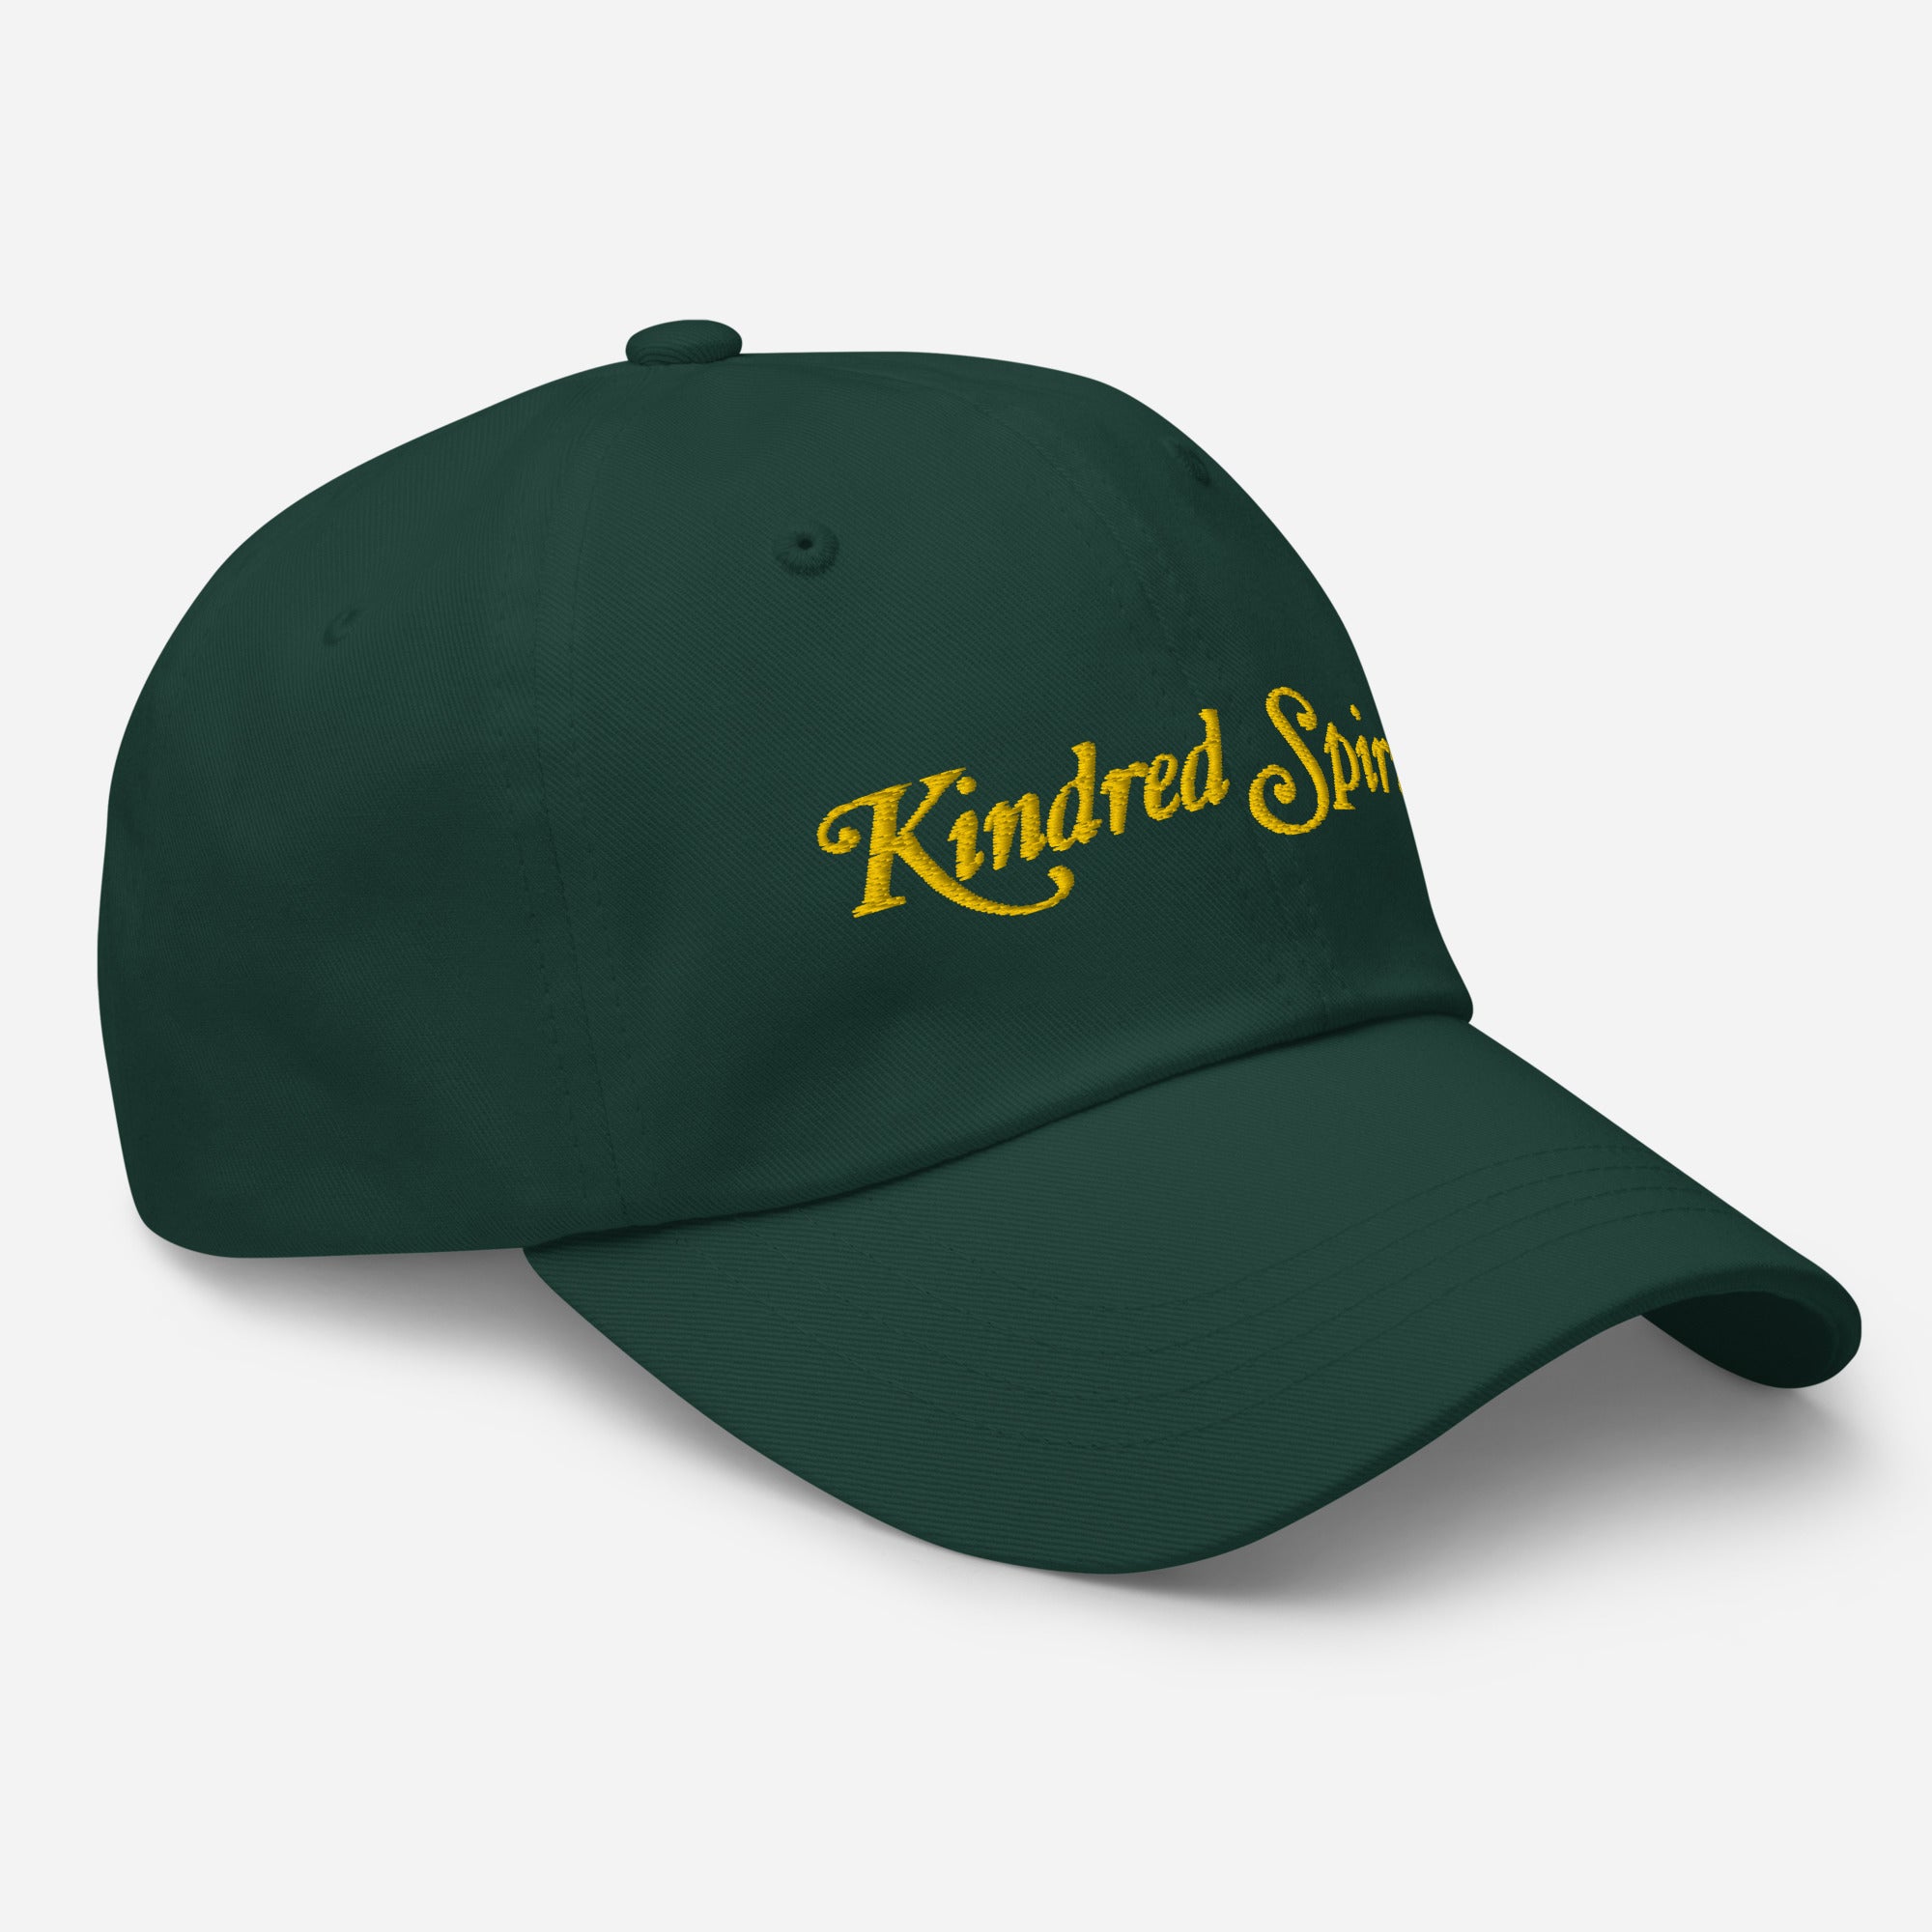 "Kindred Spirits" Embroidered Baseball Cap